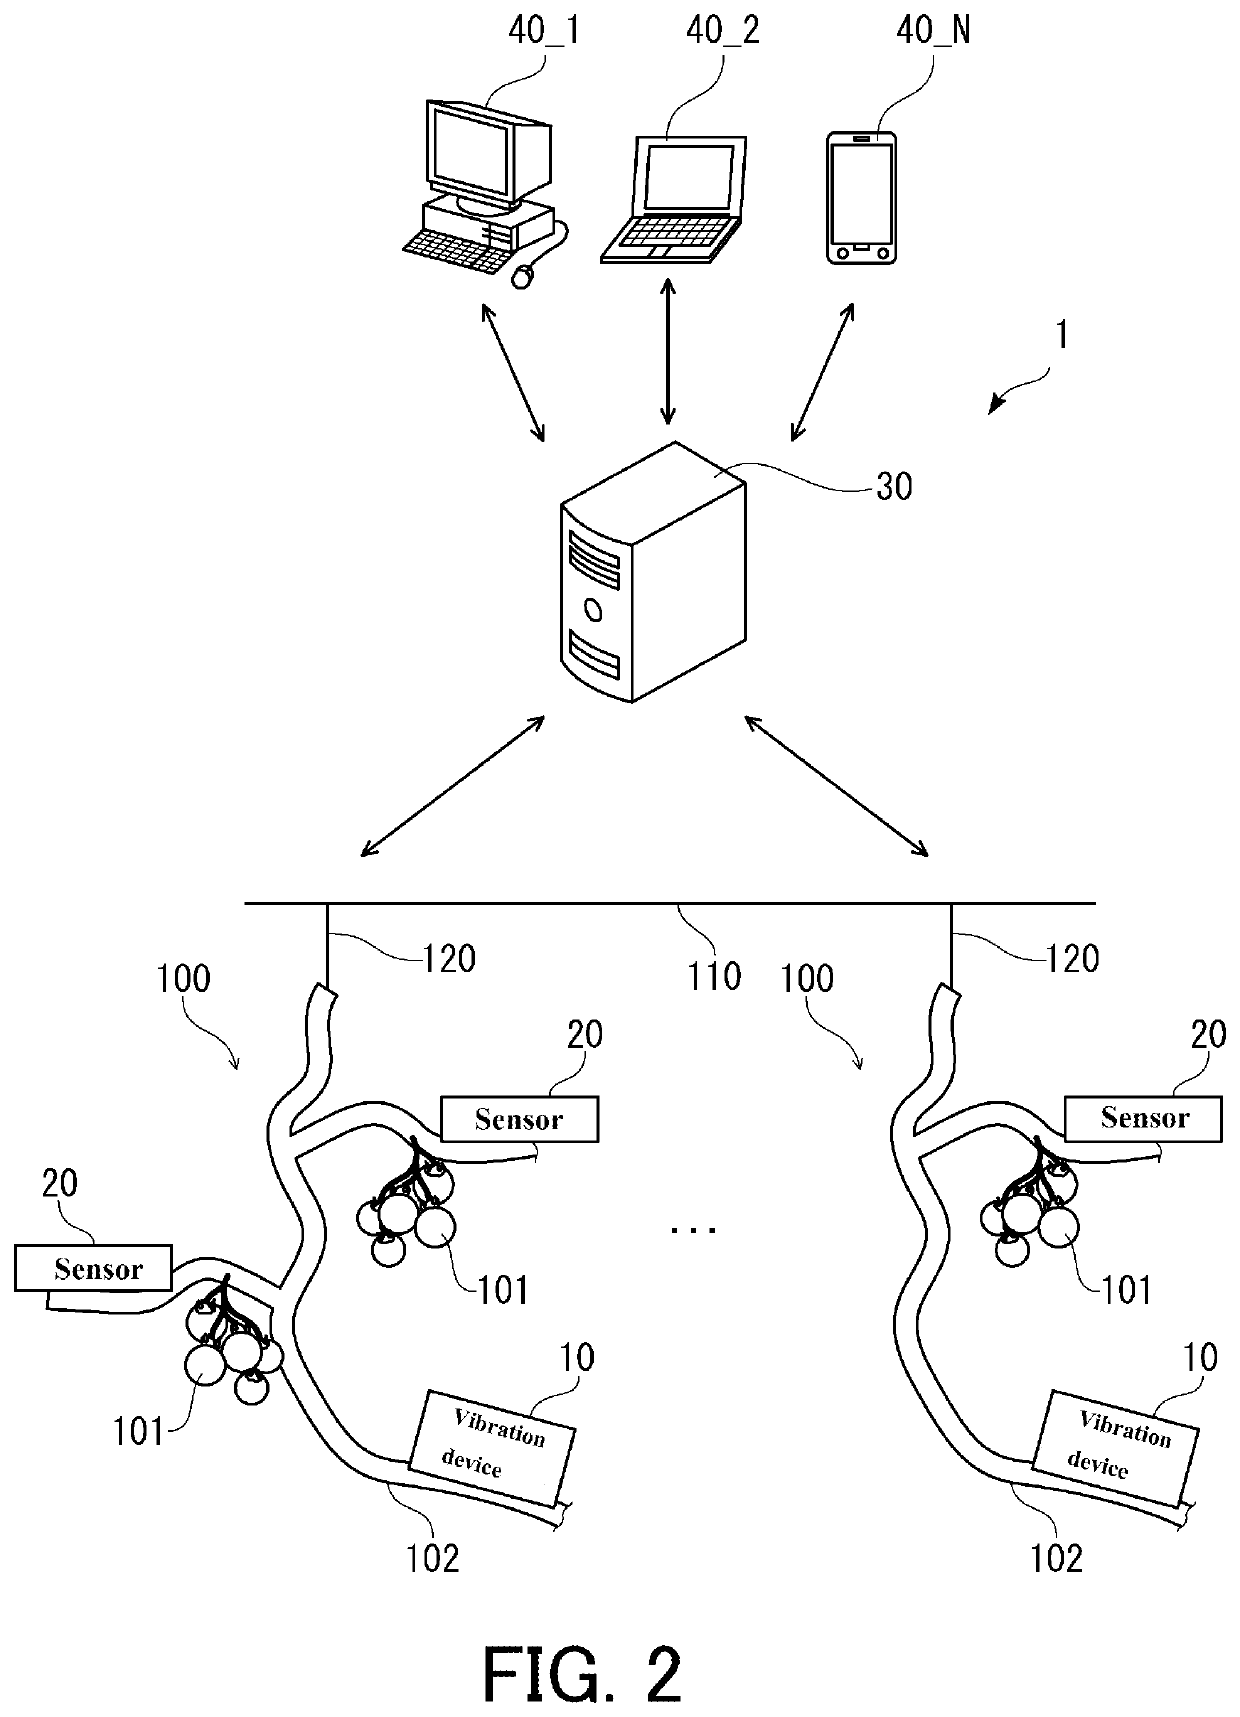 Sensing system, sensing method and non-transitory computer readable medium